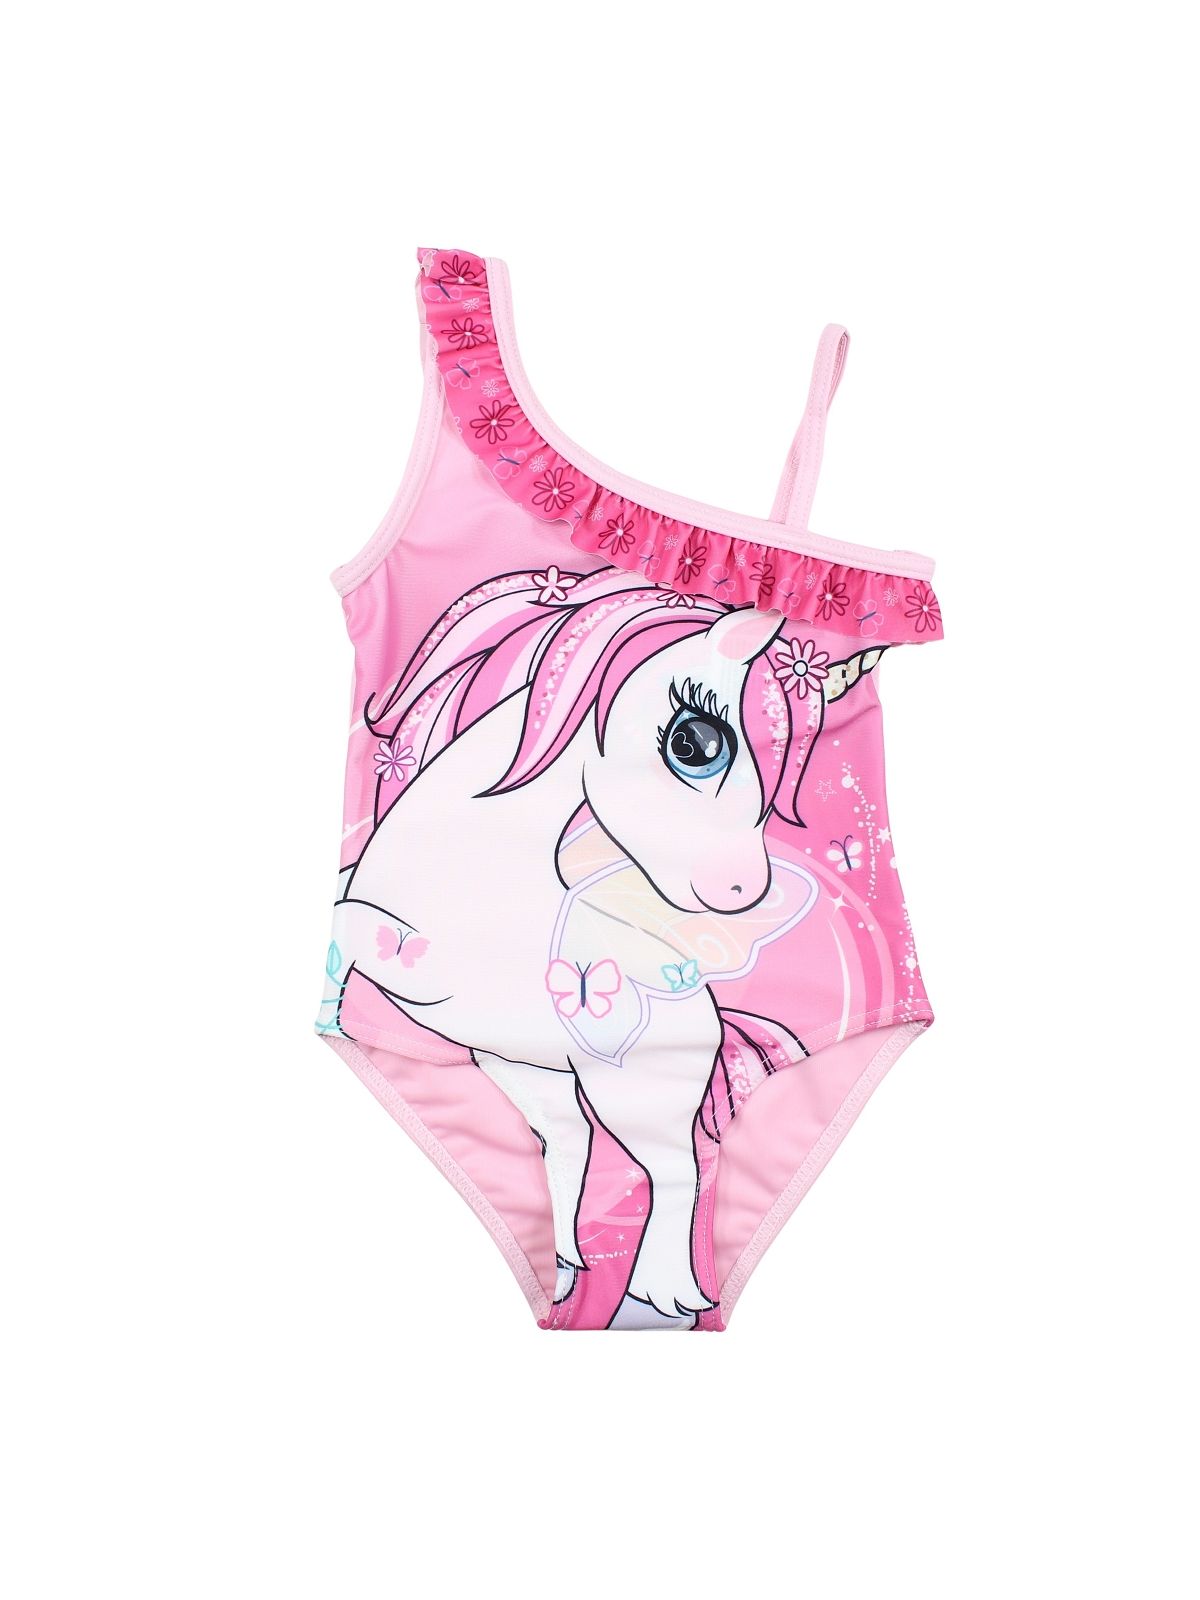 Unicorn swimsuit.